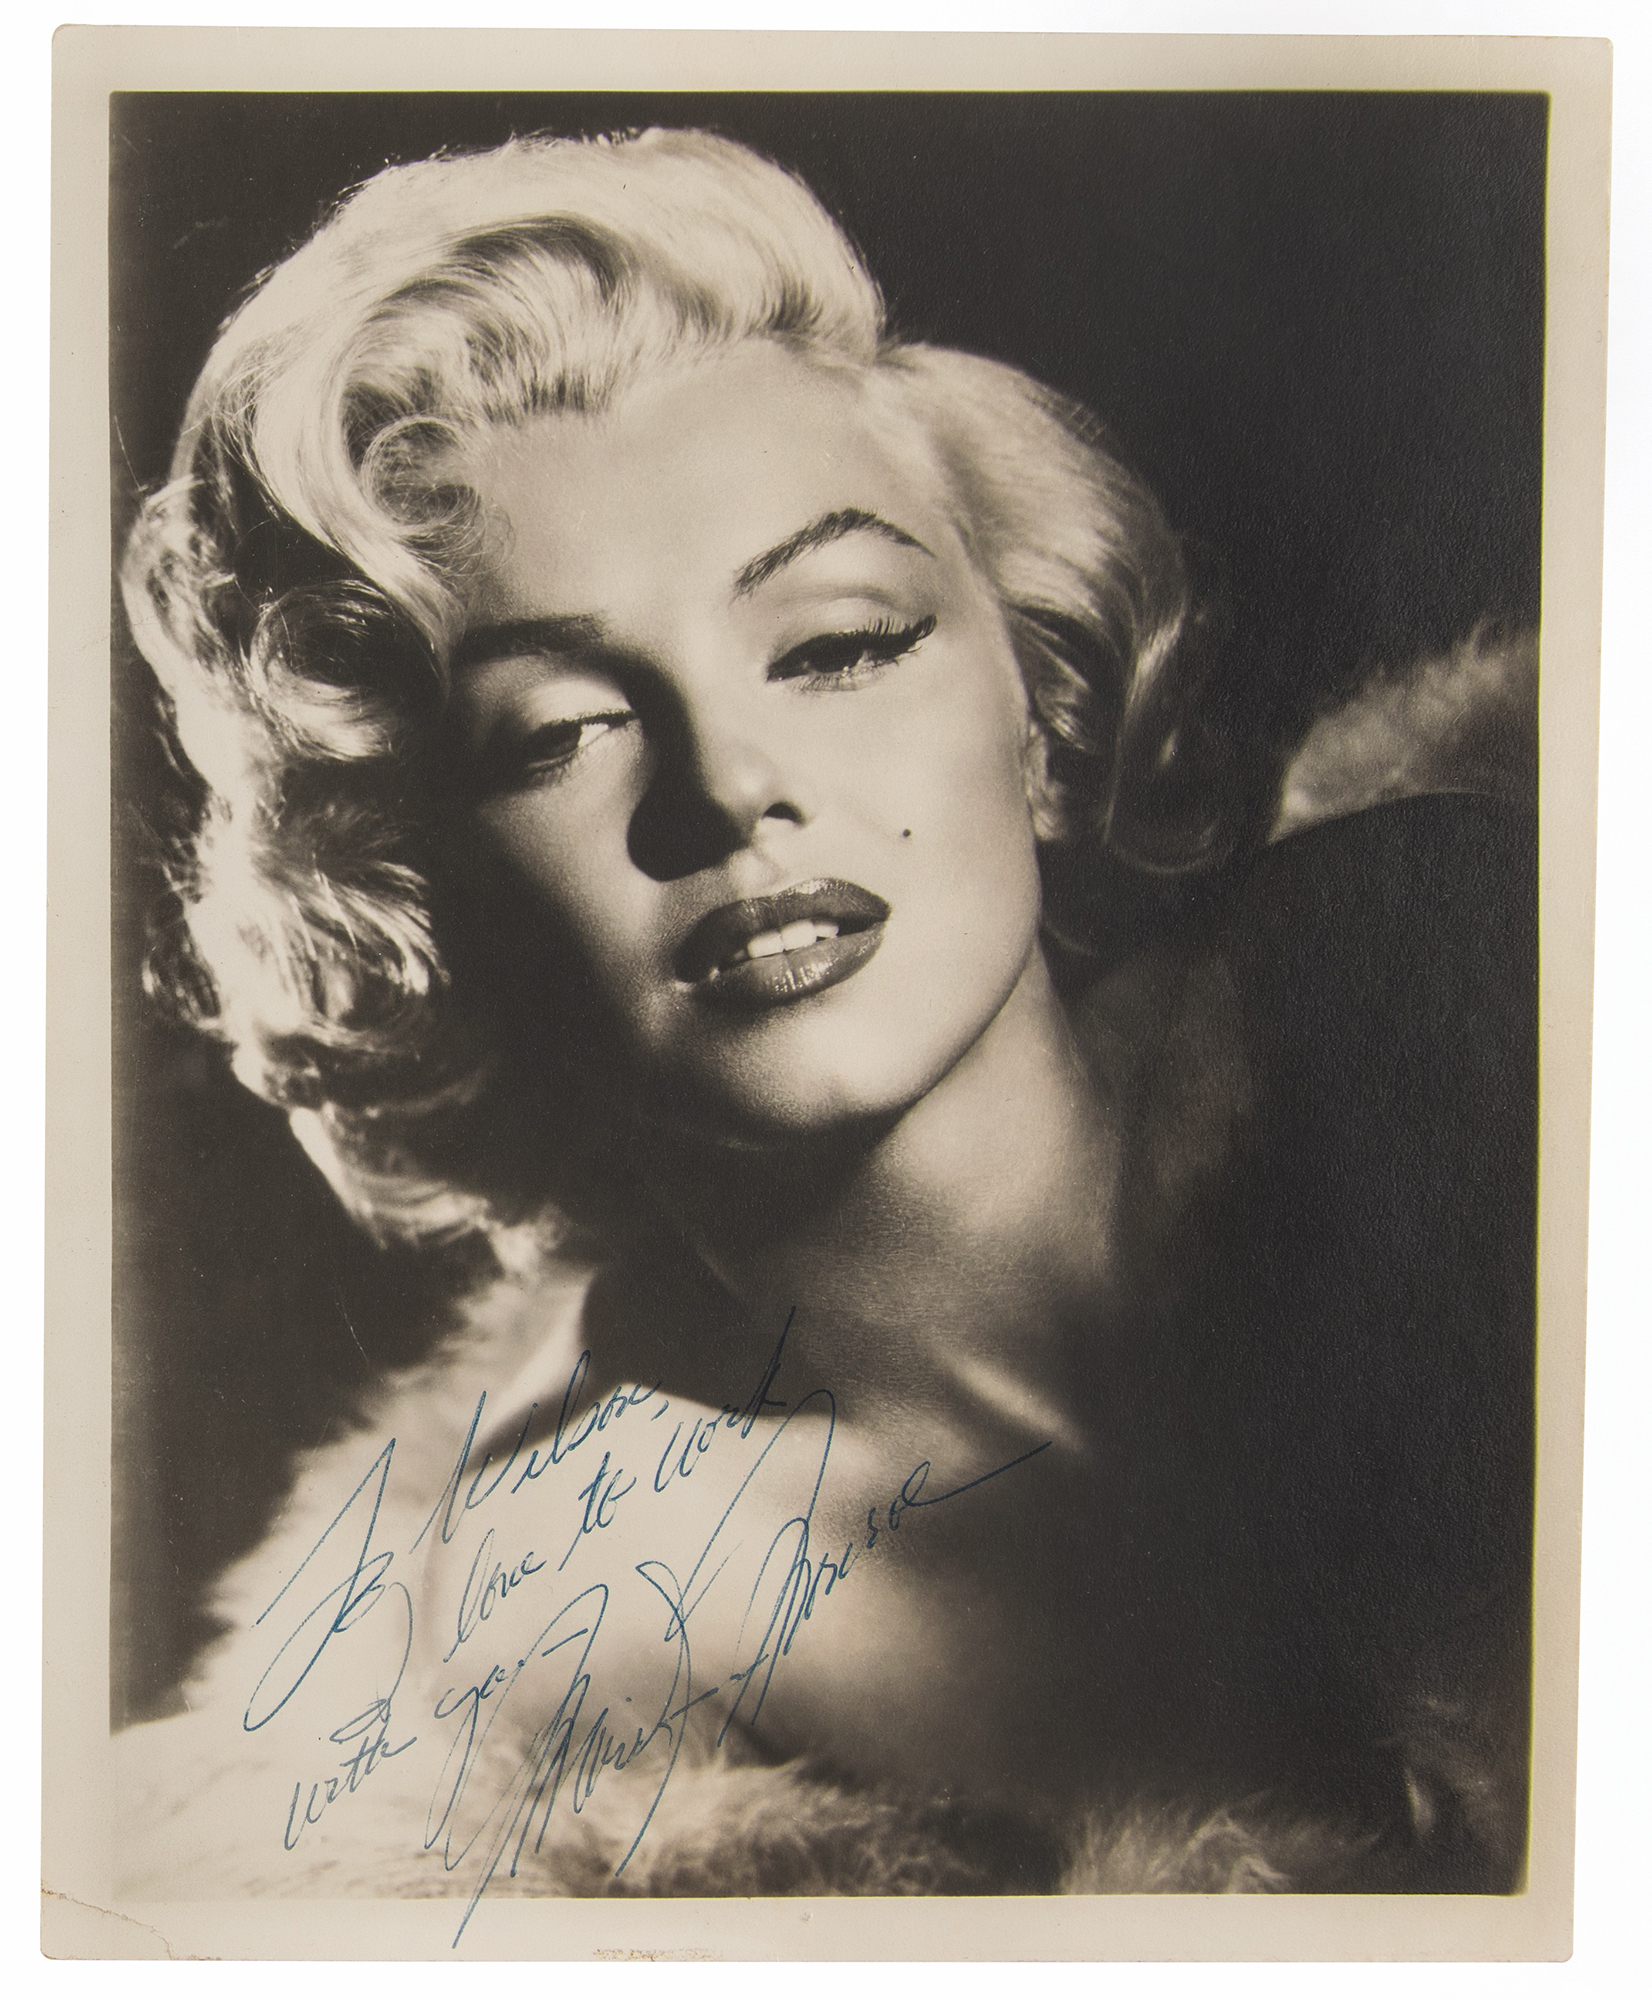 Lot #869 Marilyn Monroe Signed Photograph - Image 2